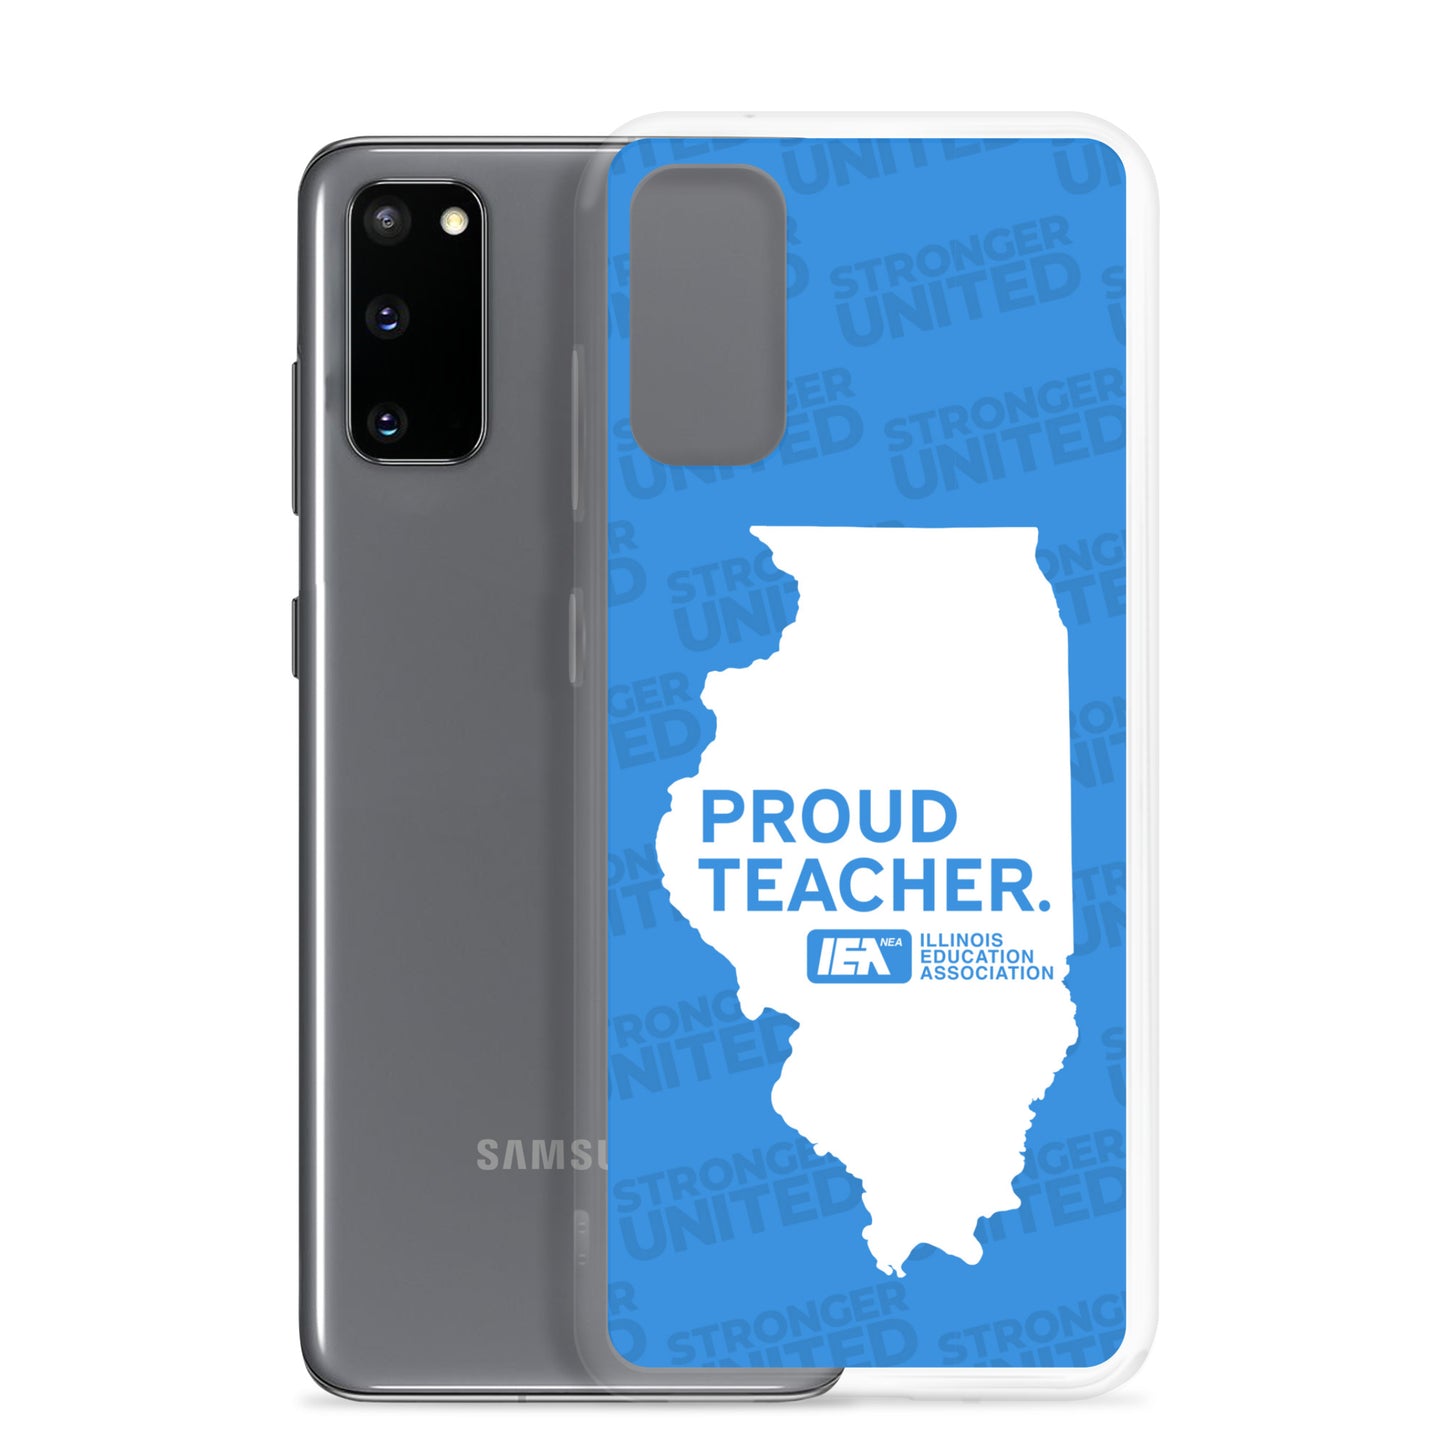 Proud Teacher Samsung Case